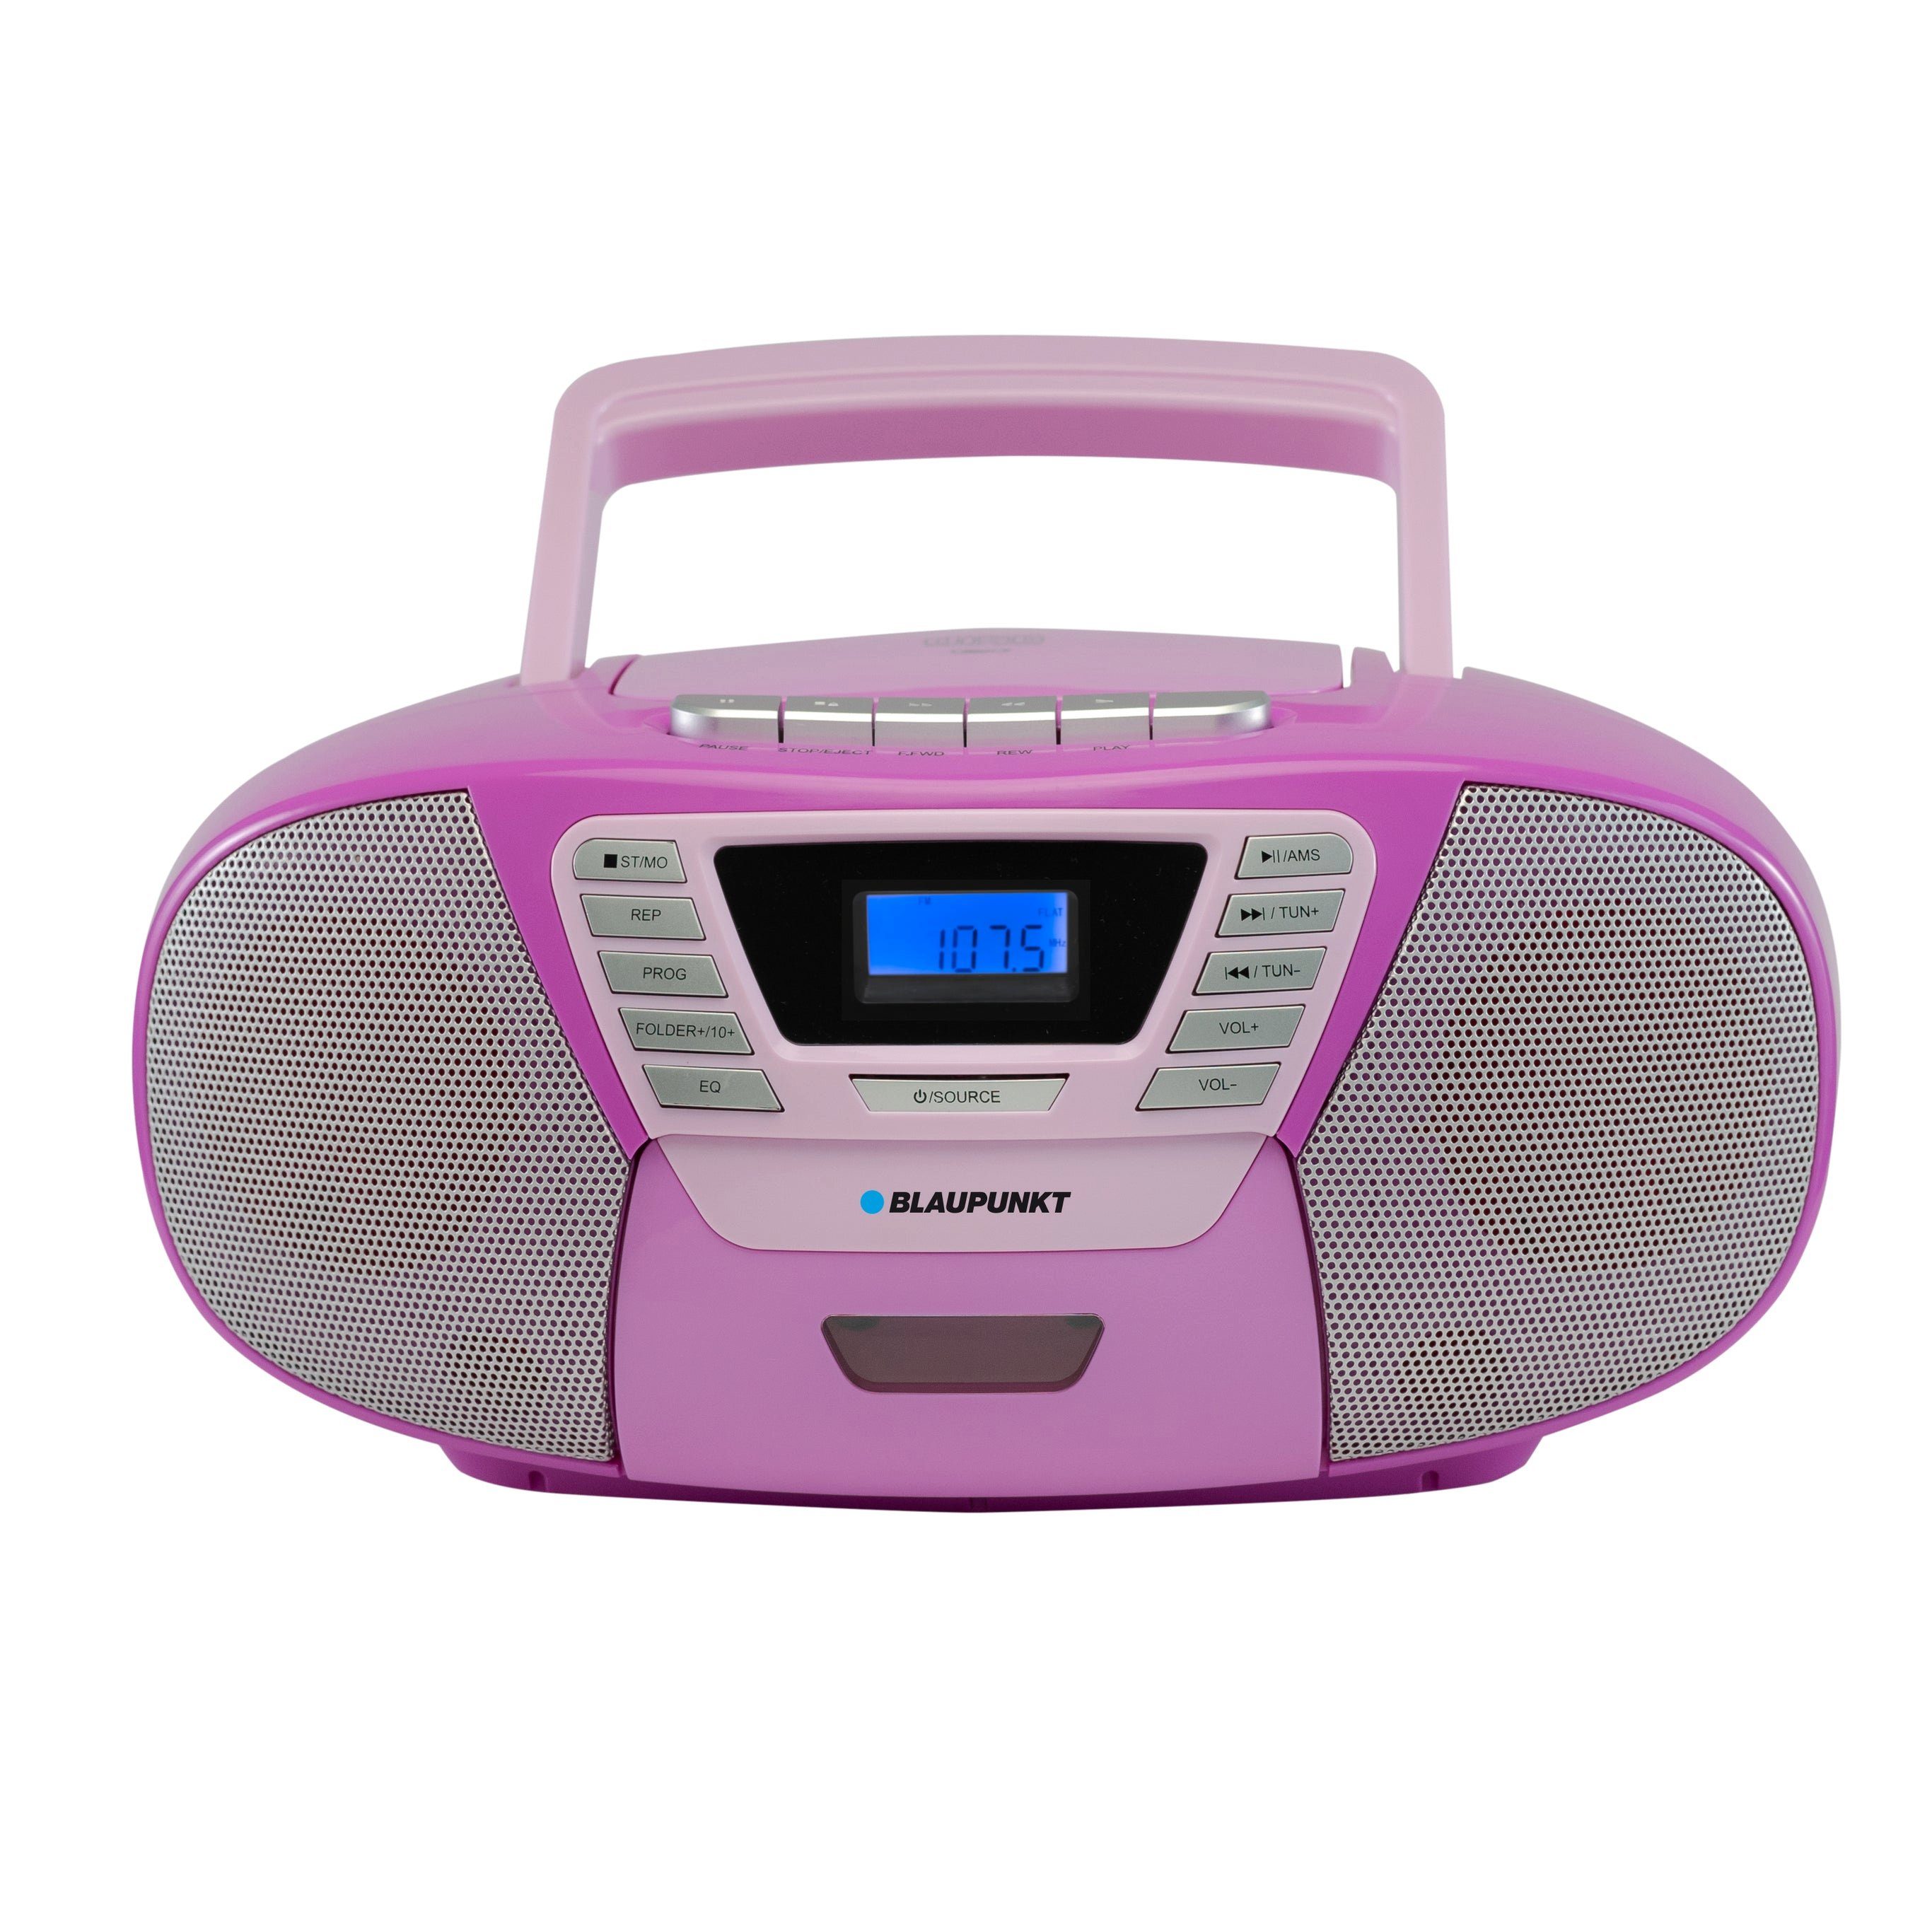 Blaupunkt B 120 6,00 (UKW, USB, und Kassetten W, CD-Player, Bluetooth, FM, Hörbuchfunktion, Radio) violett Boombox